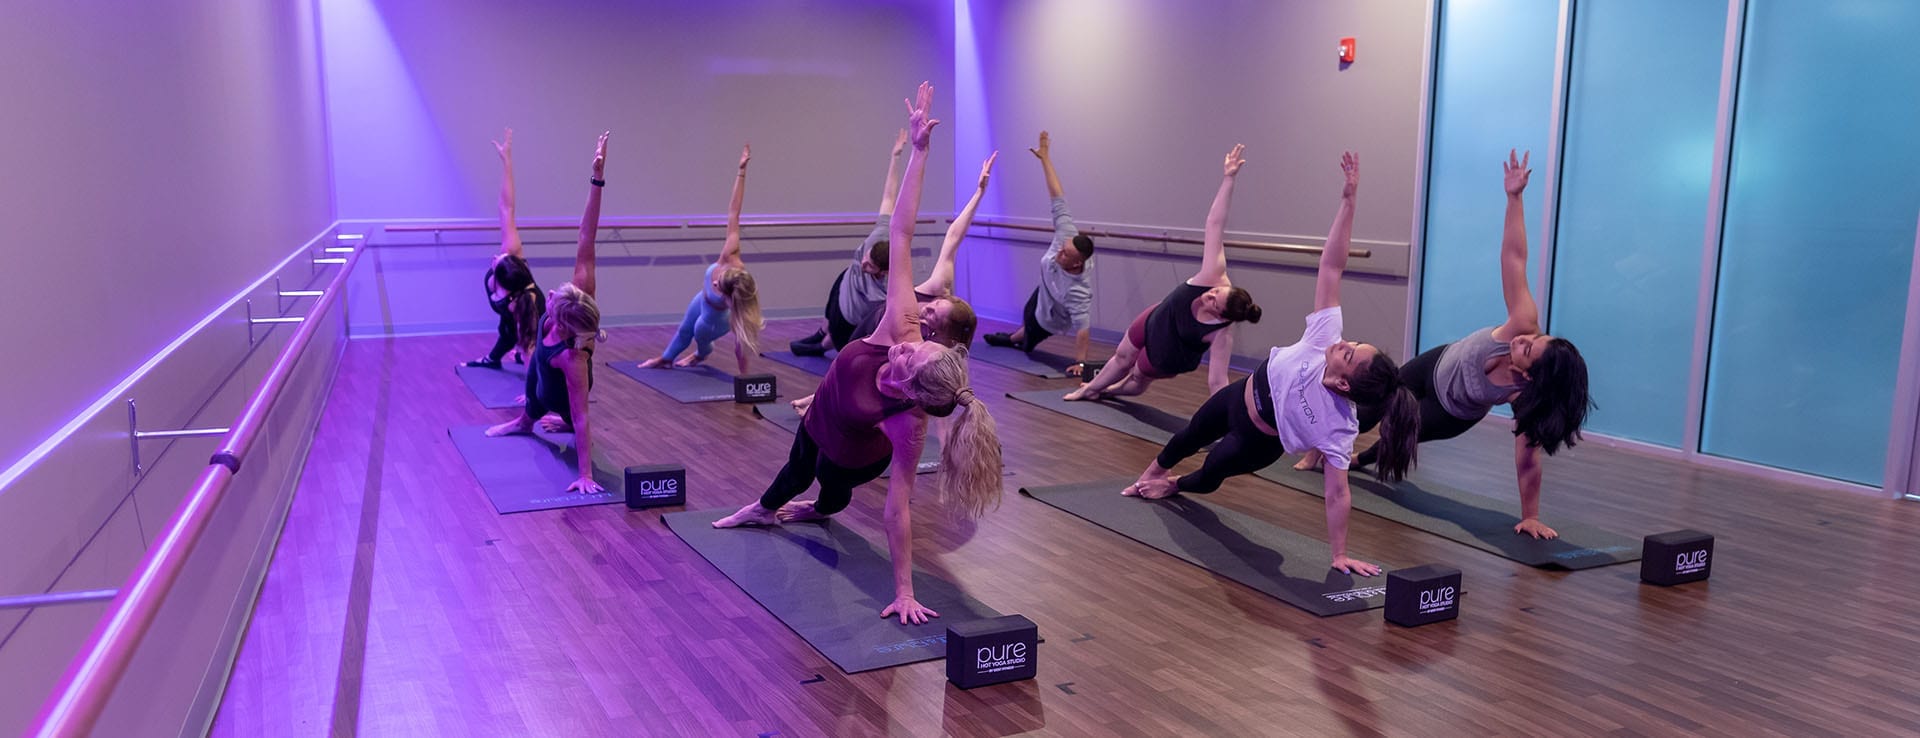 yoga class in session at yoga studio